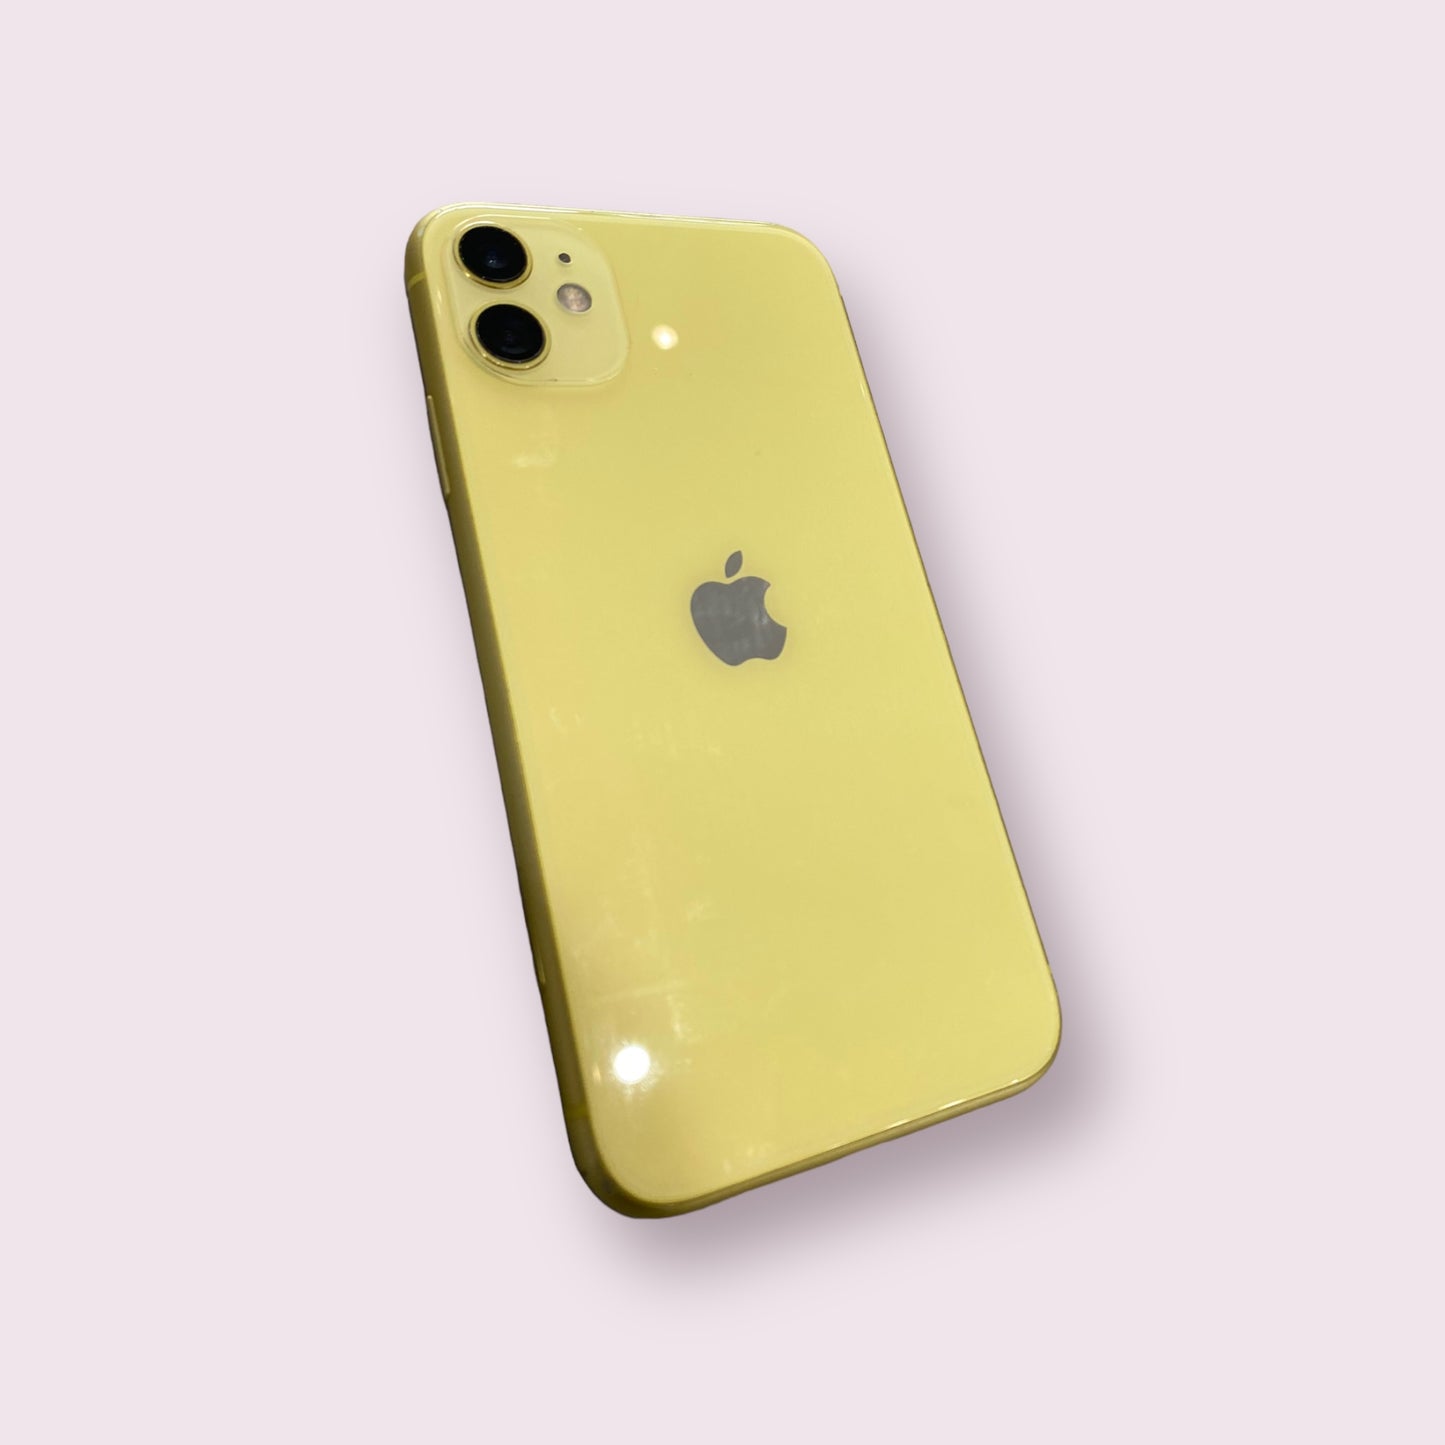 Apple iPhone 11 64GB Yellow - Unlocked - Grade B - BH100% - AM LCD